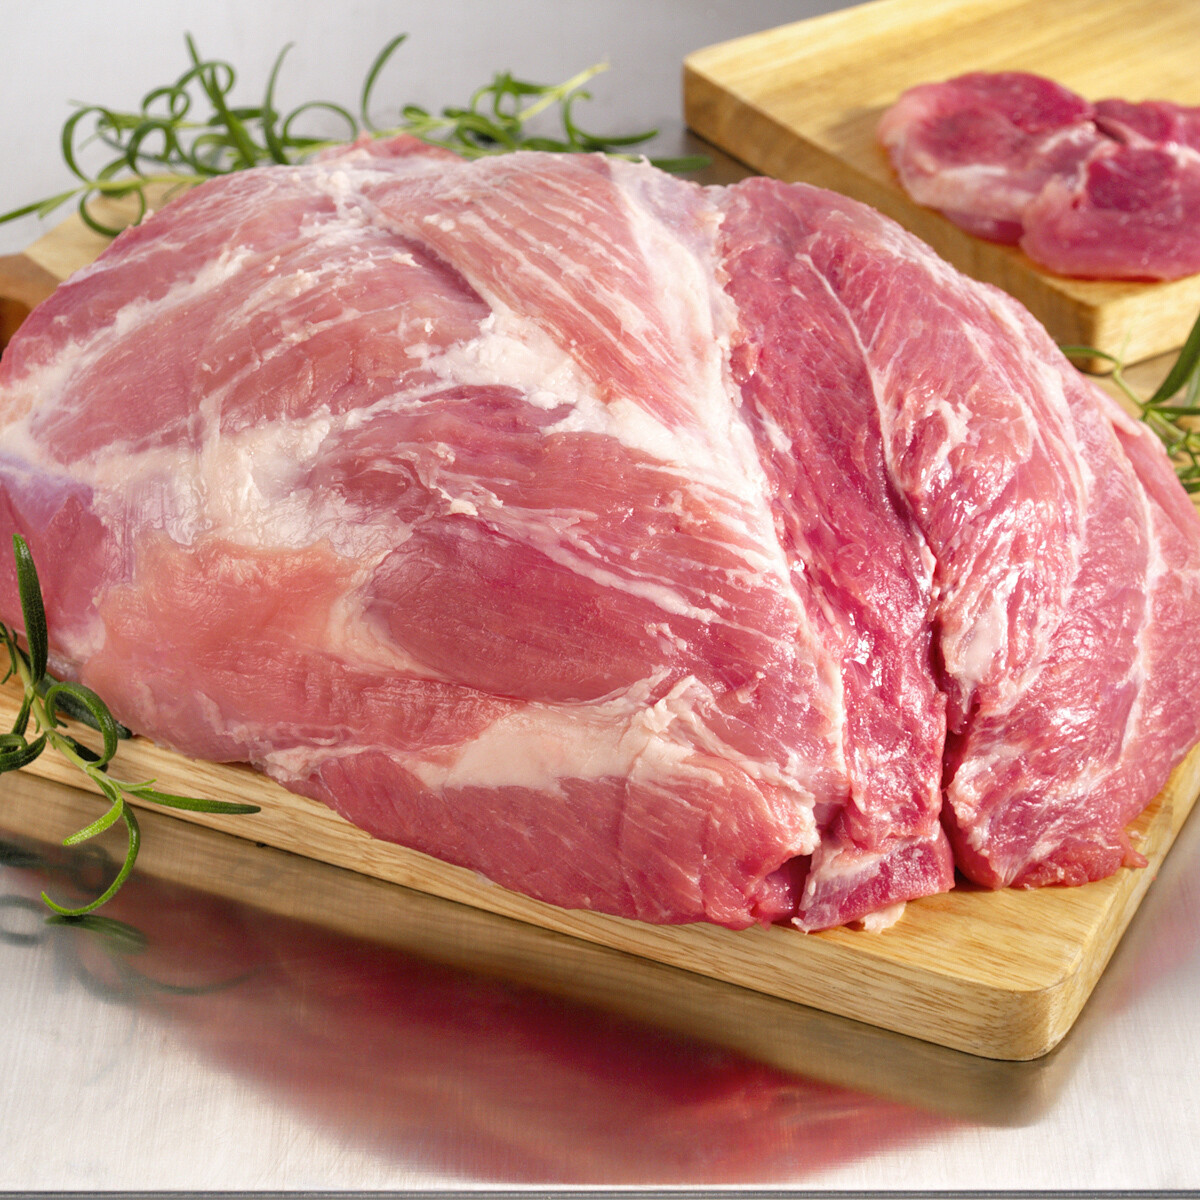 Berkshire Pork Ham Trim 2.9-3.25lbs 黑毛猪猪腿肉 $9.99/lb